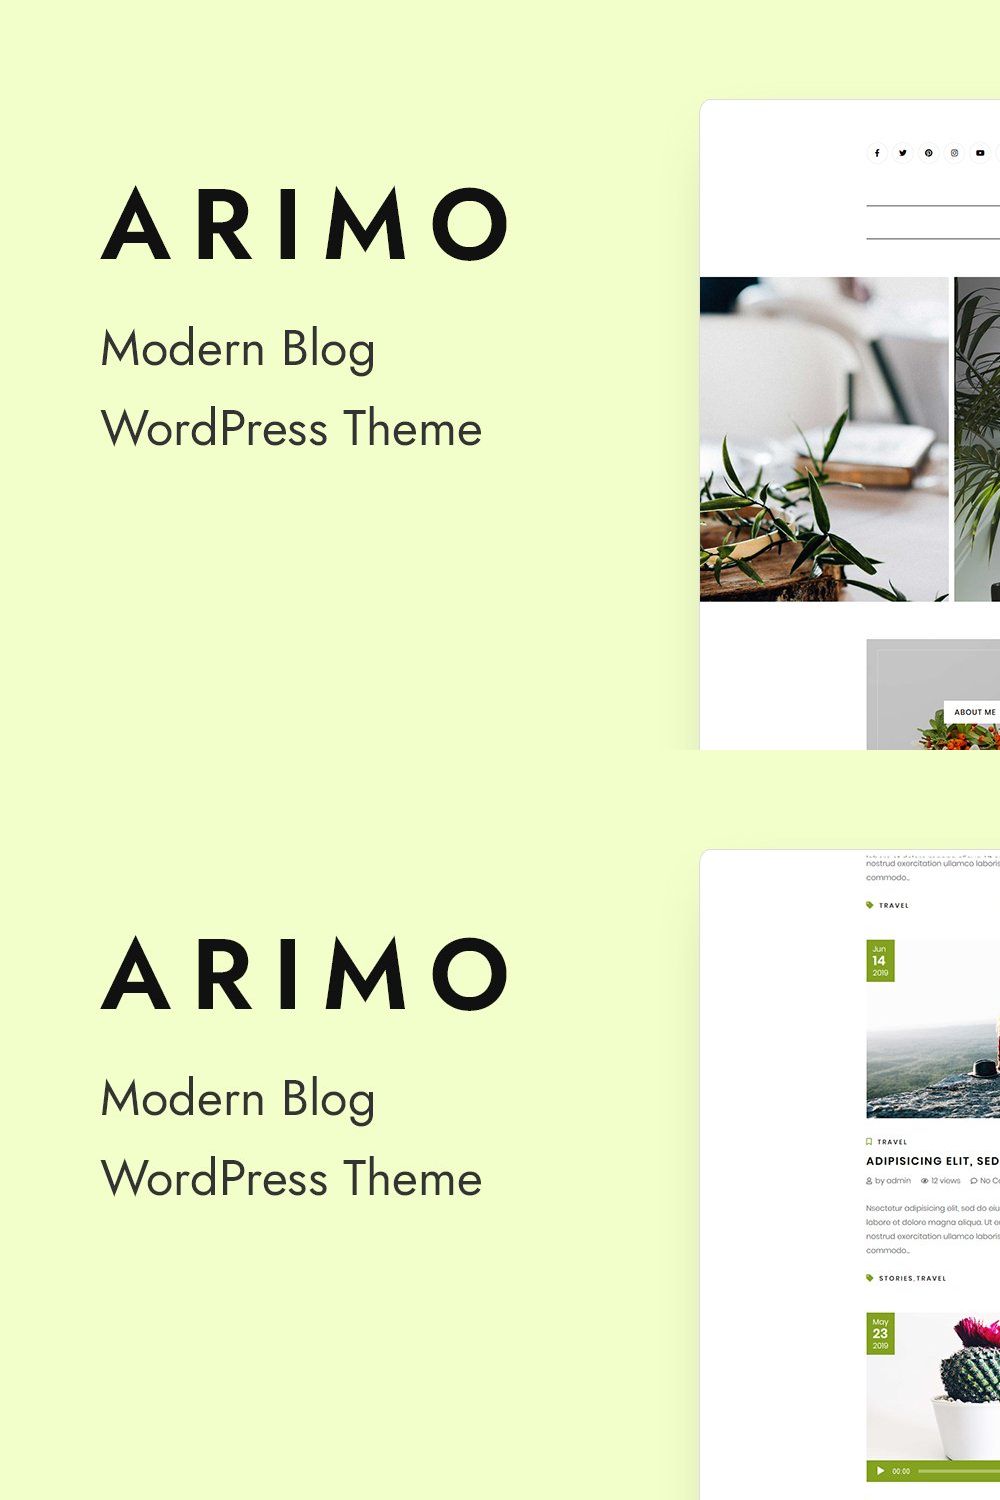 Modern Blog WordPress Theme - Arimo pinterest preview image.